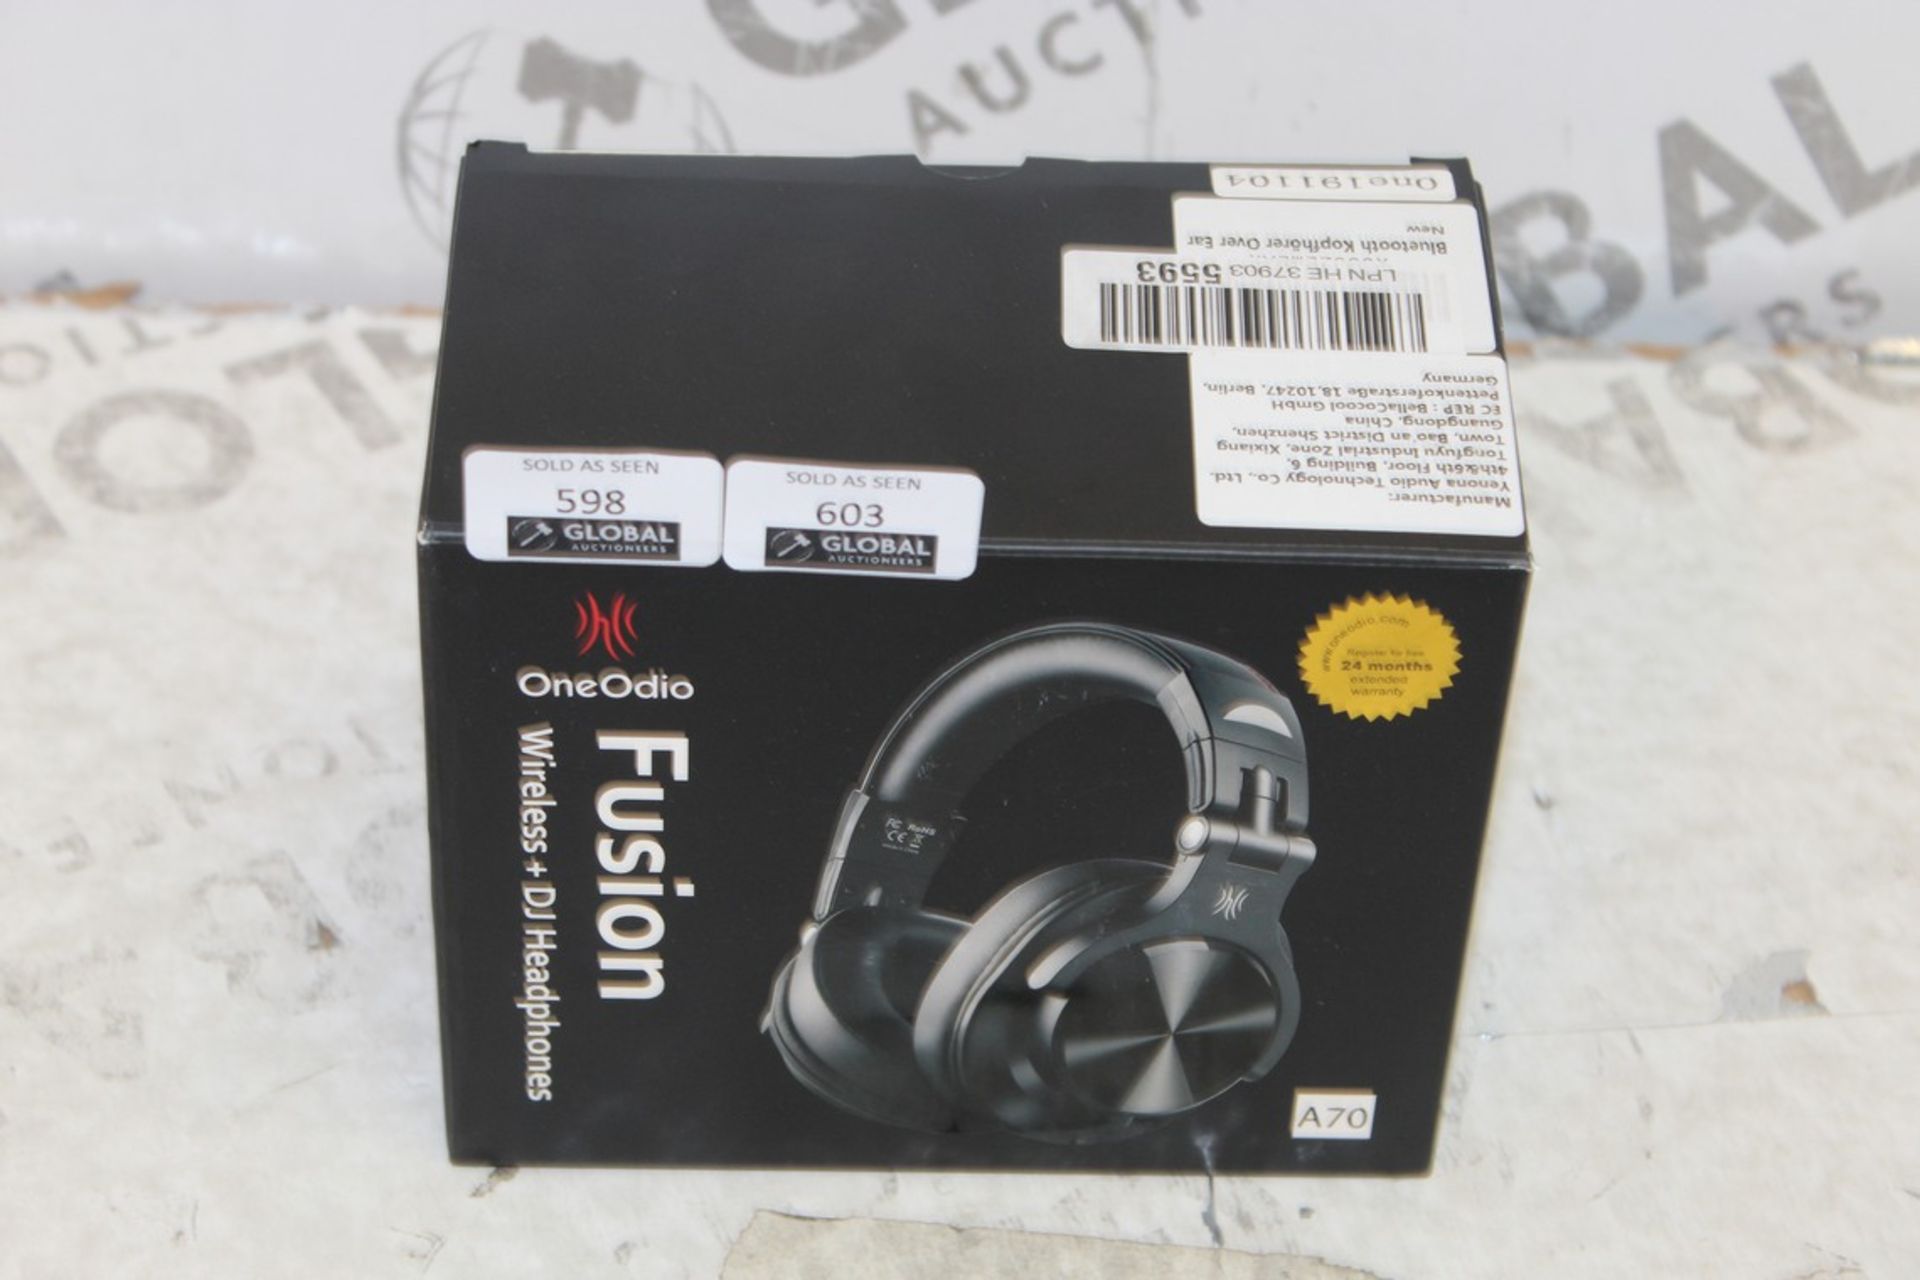 Boxed Brand New Pair Audio Fusion A70 Black Wireless & DJ Headphones RRP £45